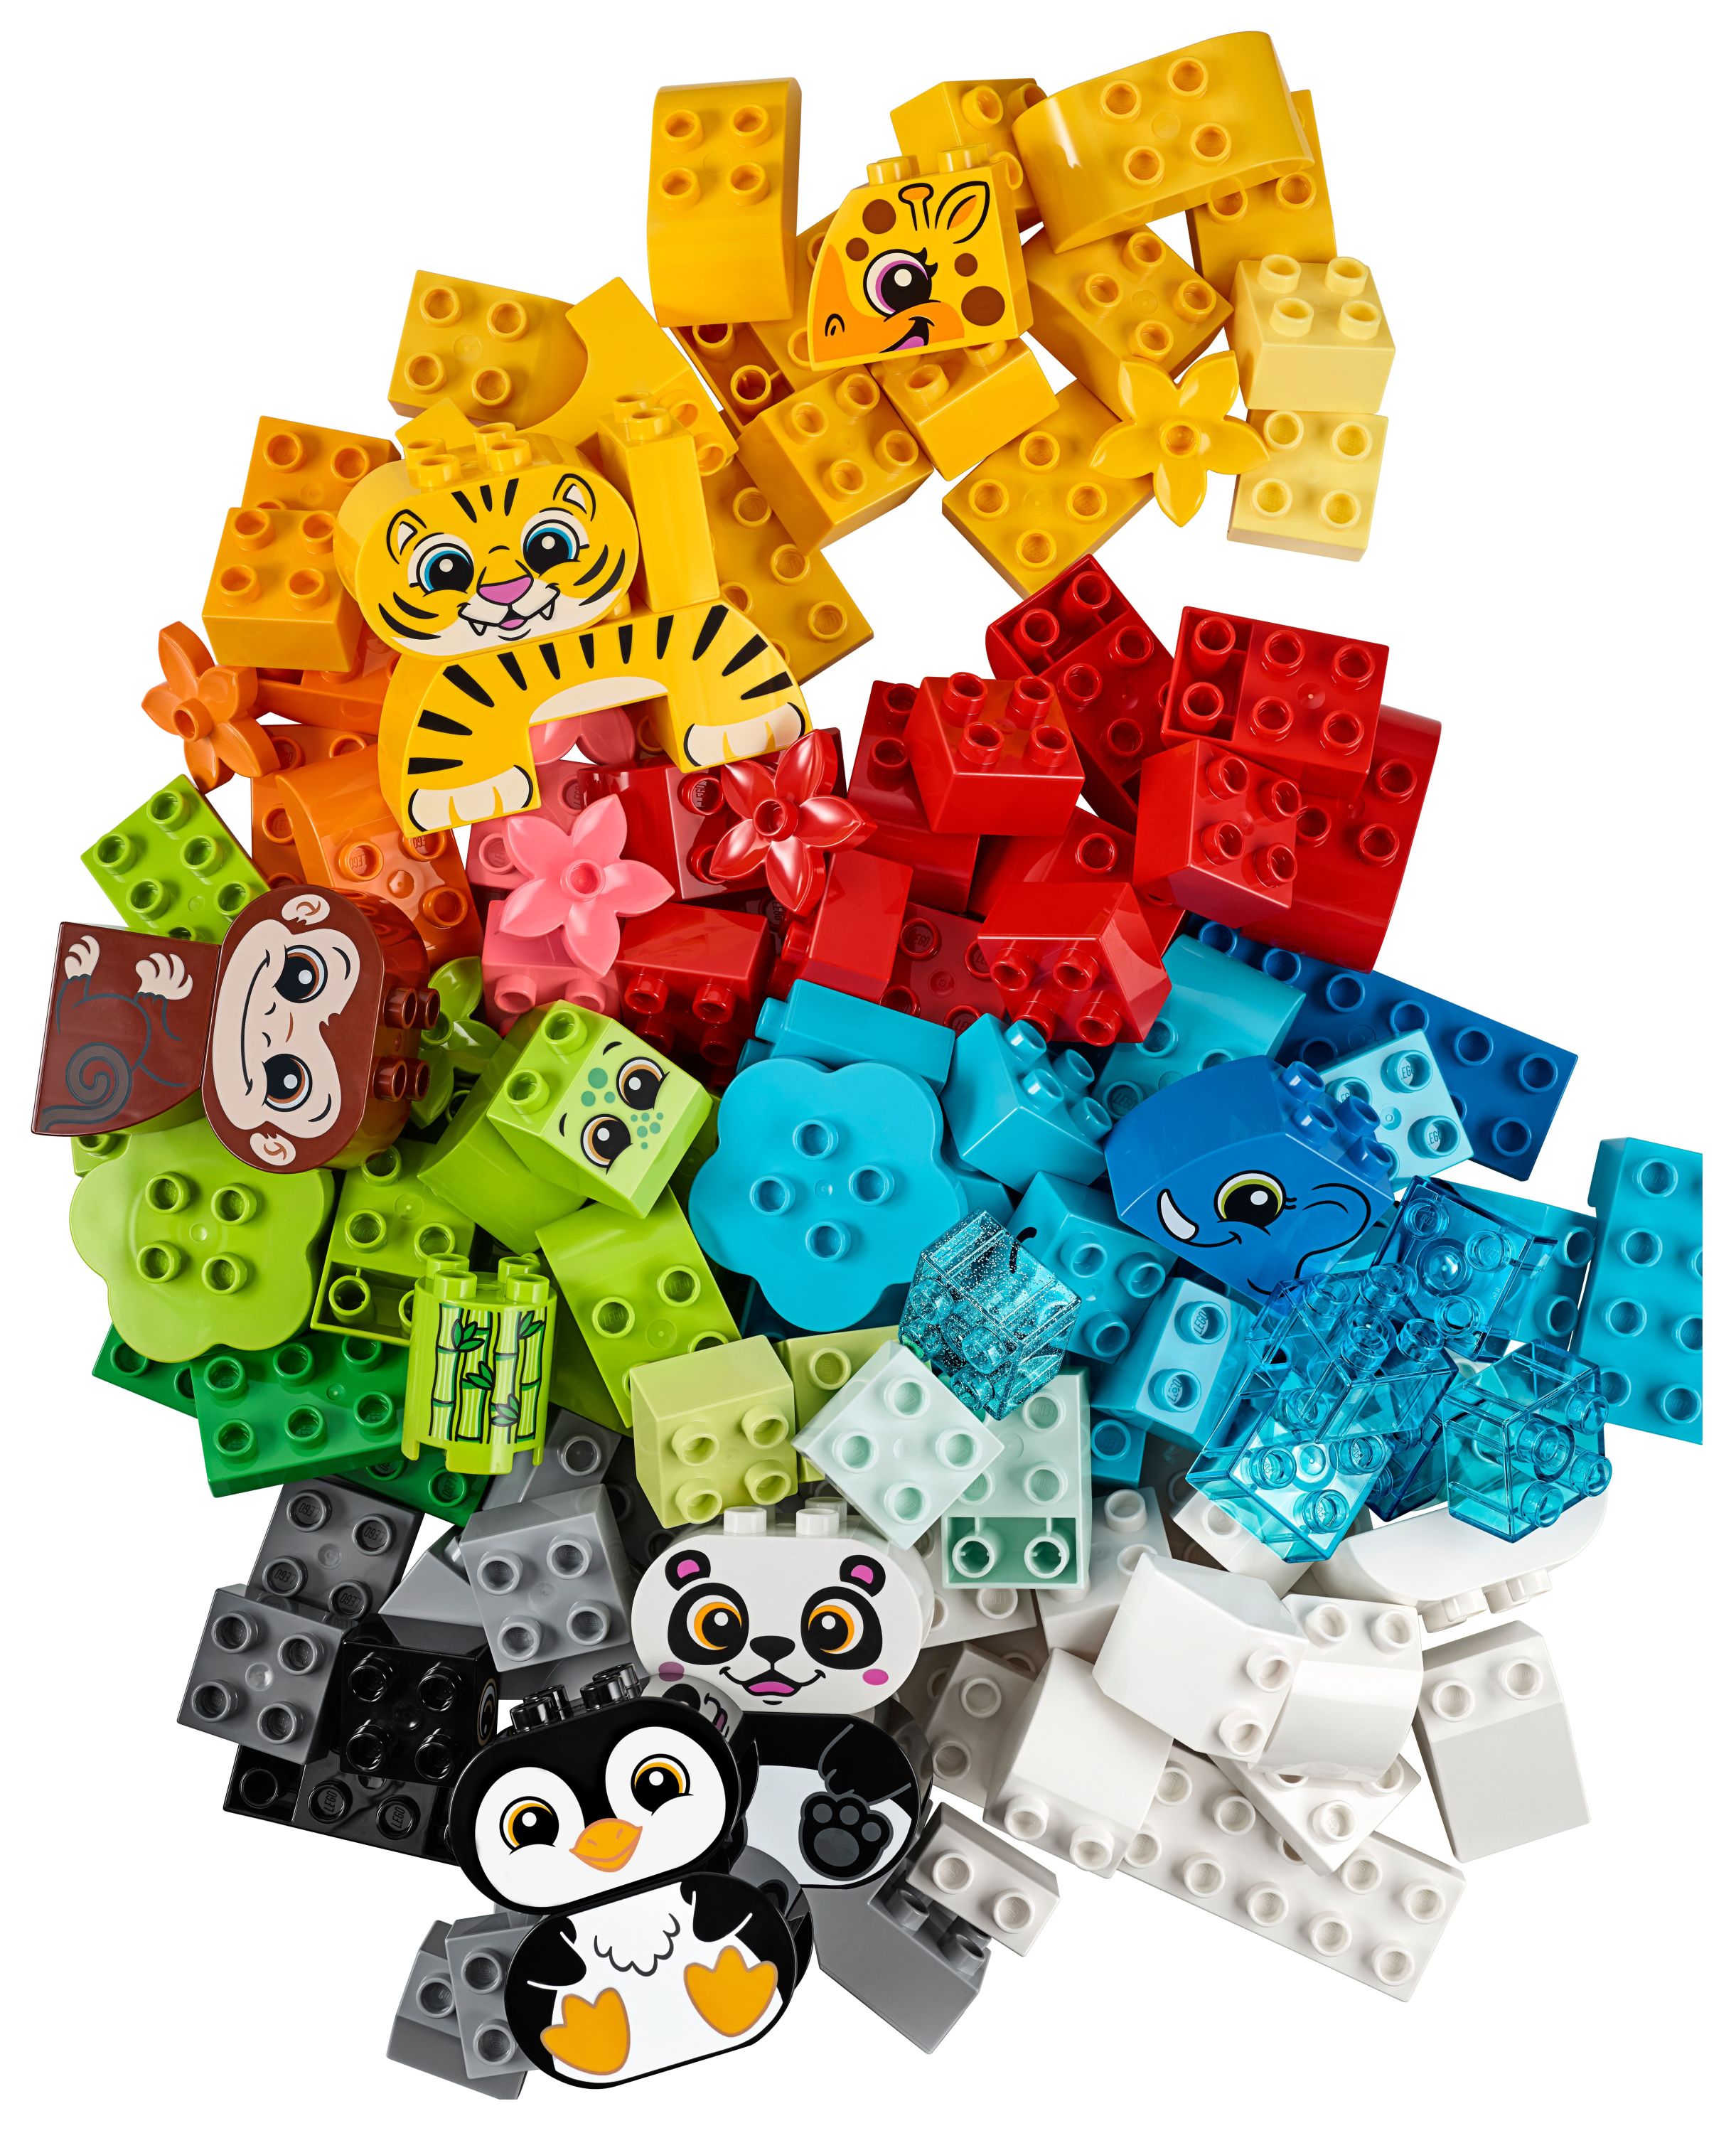 LEGO DUPLO Classic Creative Animals 10934 Building Toy Set (175 Pieces) - image 3 of 7